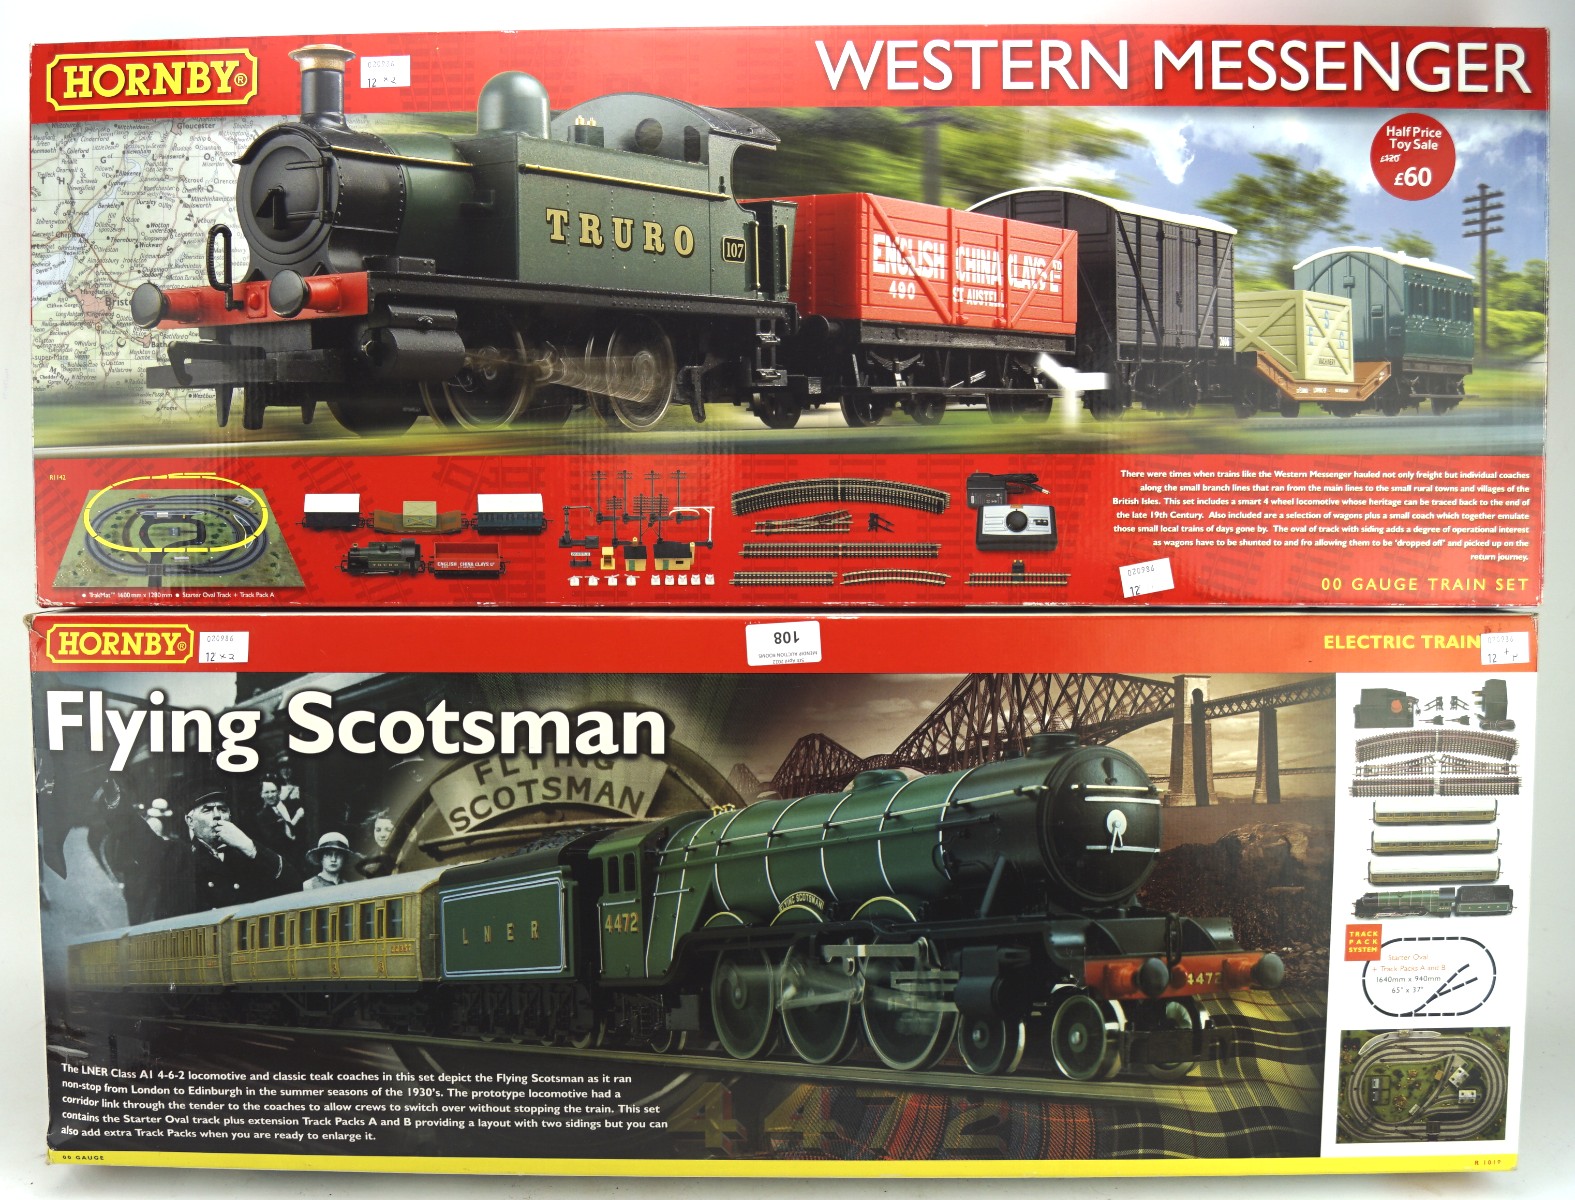 Two Hornby train sets; Western Messenger R1142 & Flying Scotsman R1019,